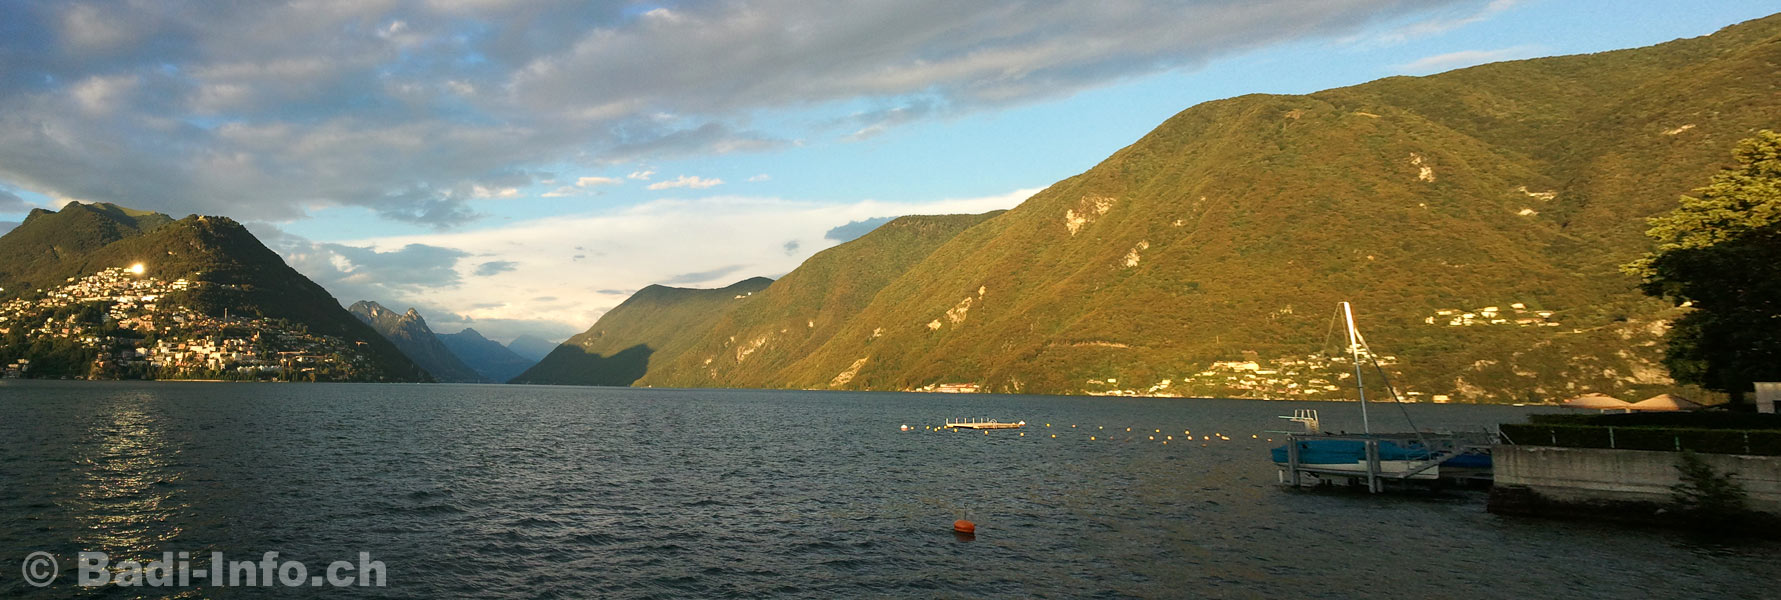 Paradiso Lido Lago Lugano